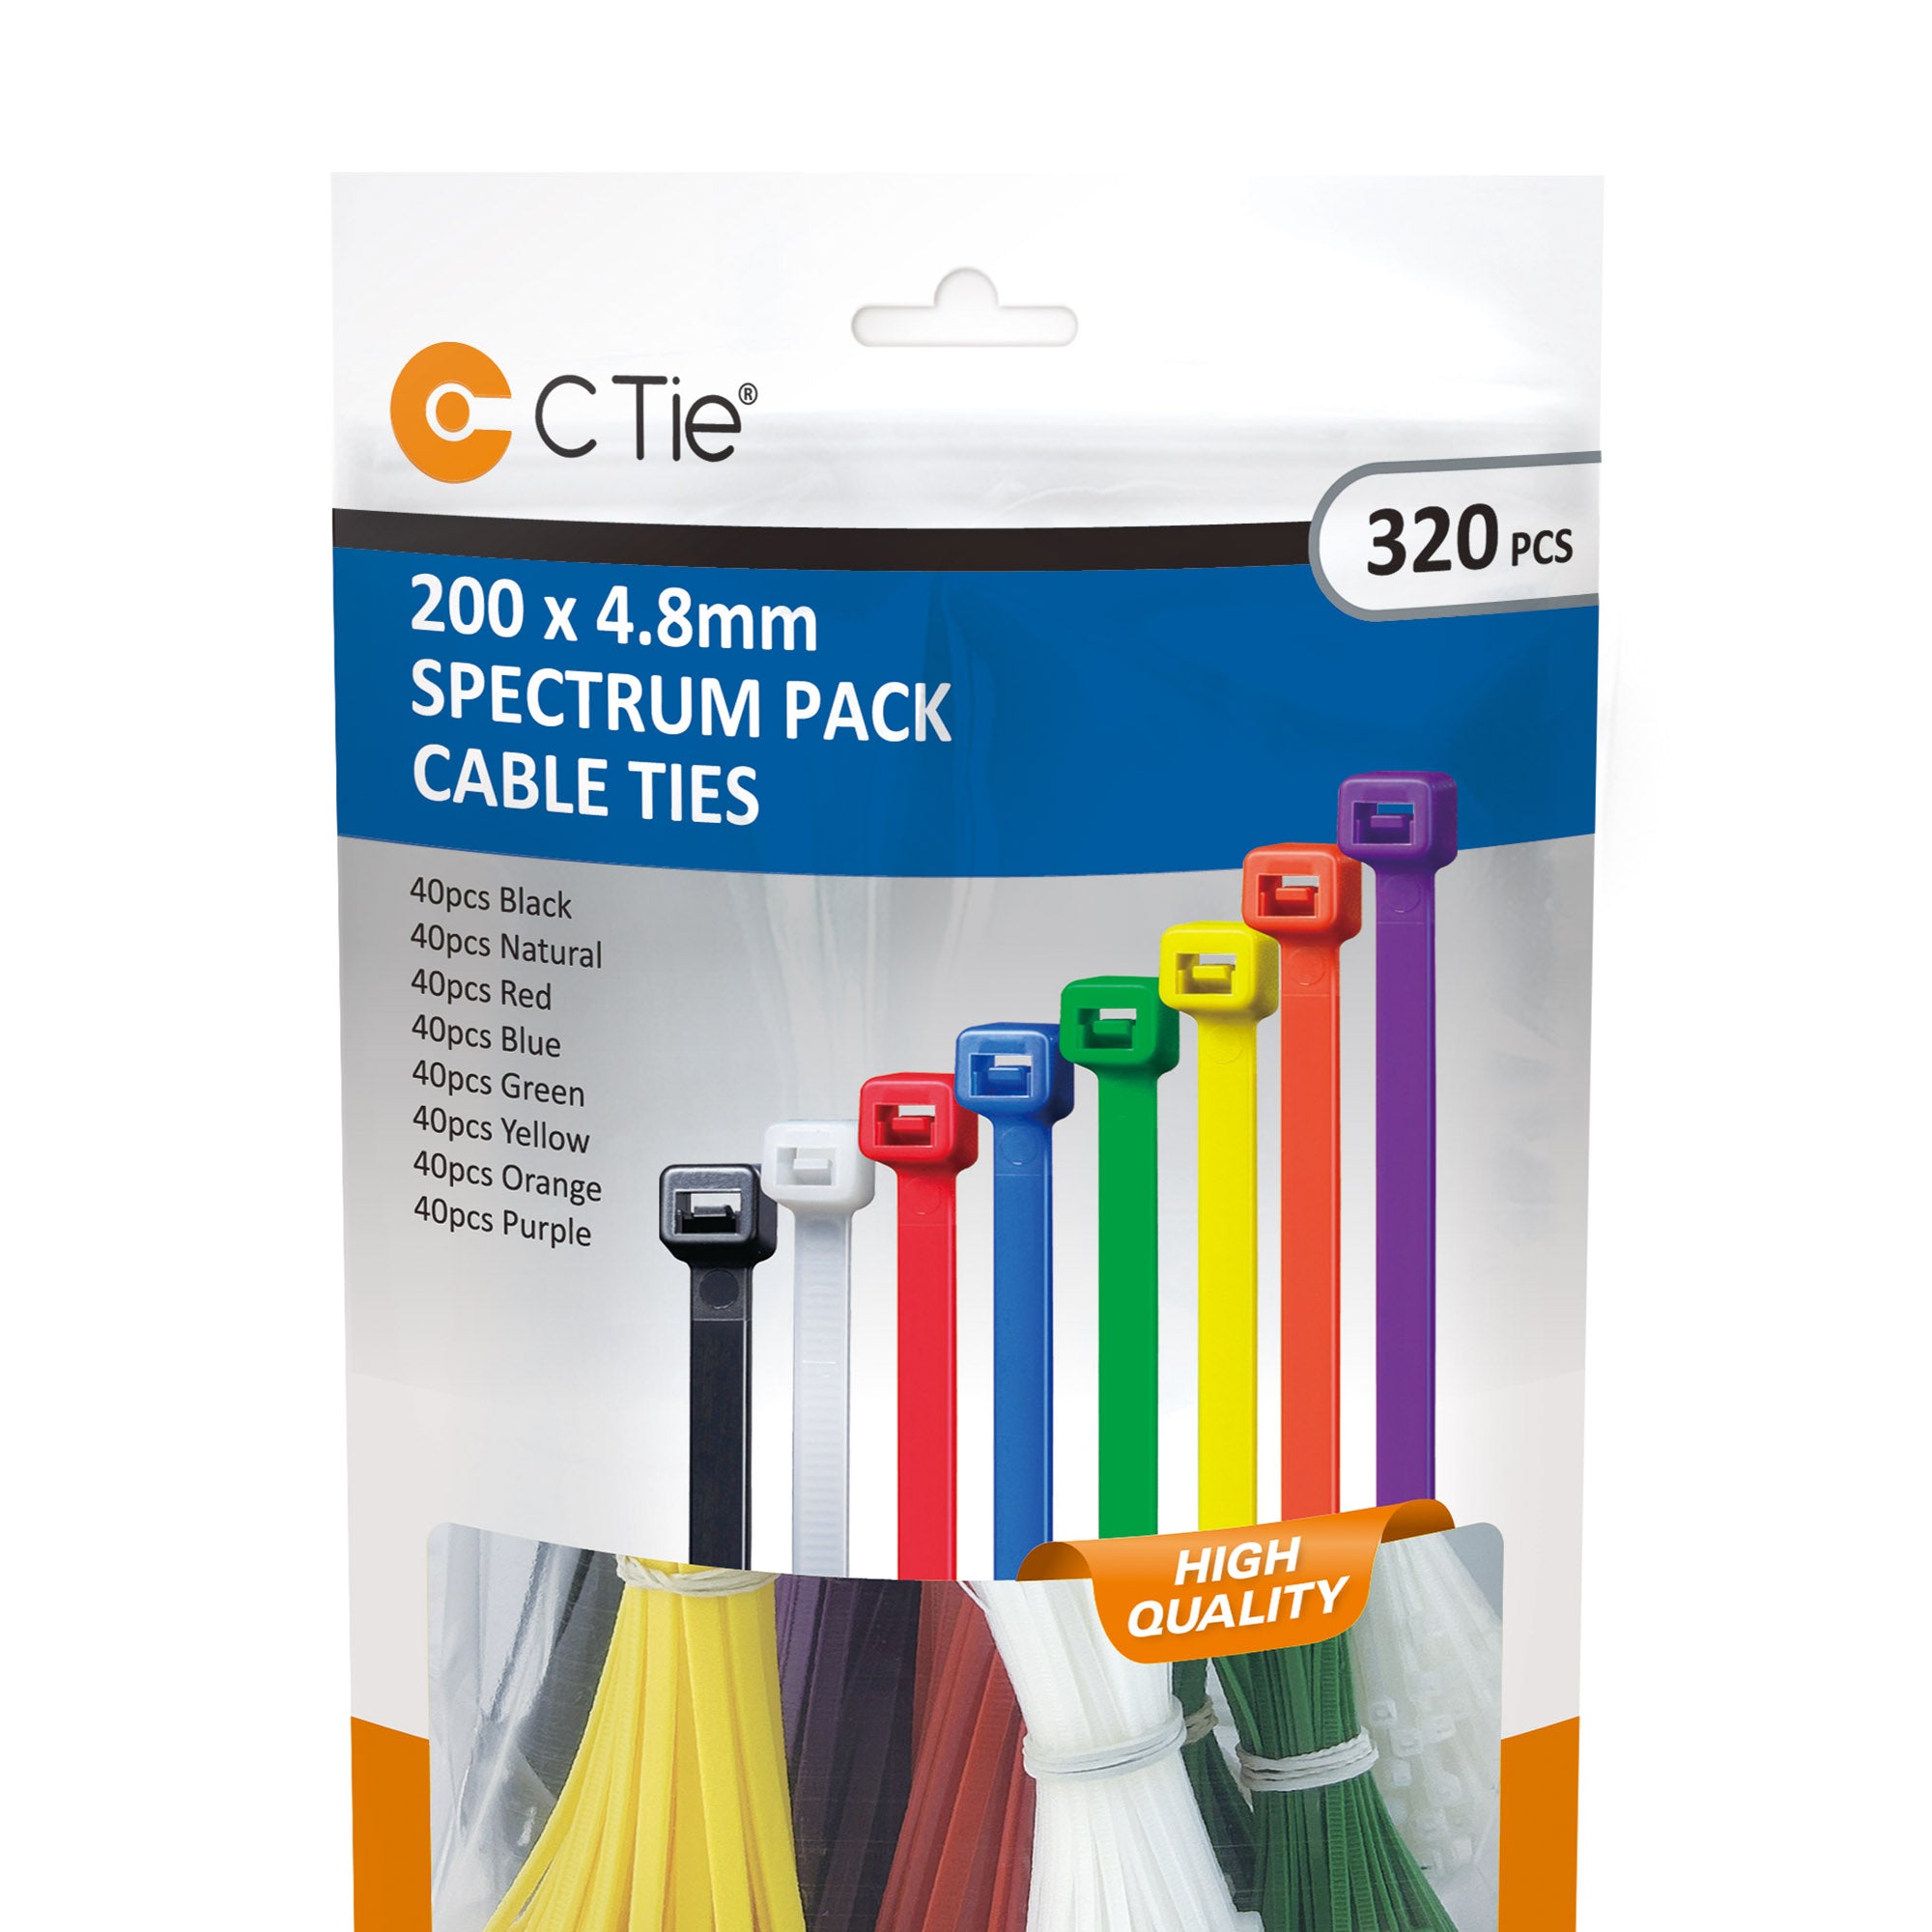 Assorted Cable Ties - 320pcs - 200 x 4.8mm - Multi Colour Spectrum Pack